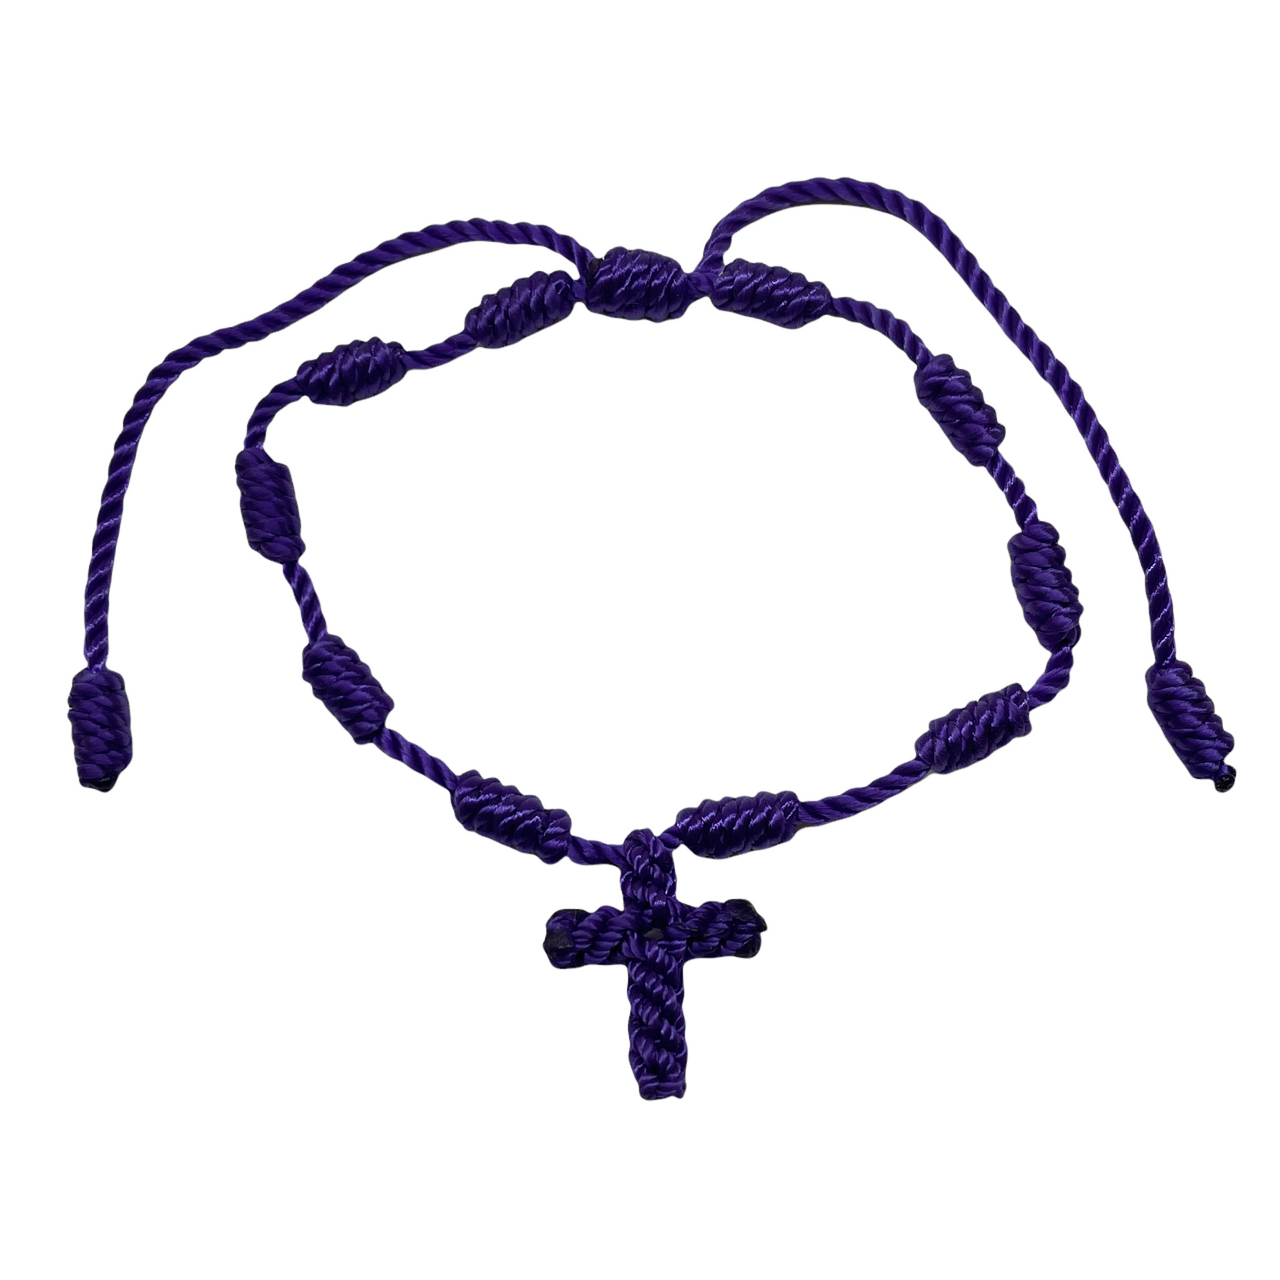 Knotted Cord Rosary Cross Prayer Bracelet PURPLE - Lazaro Brand